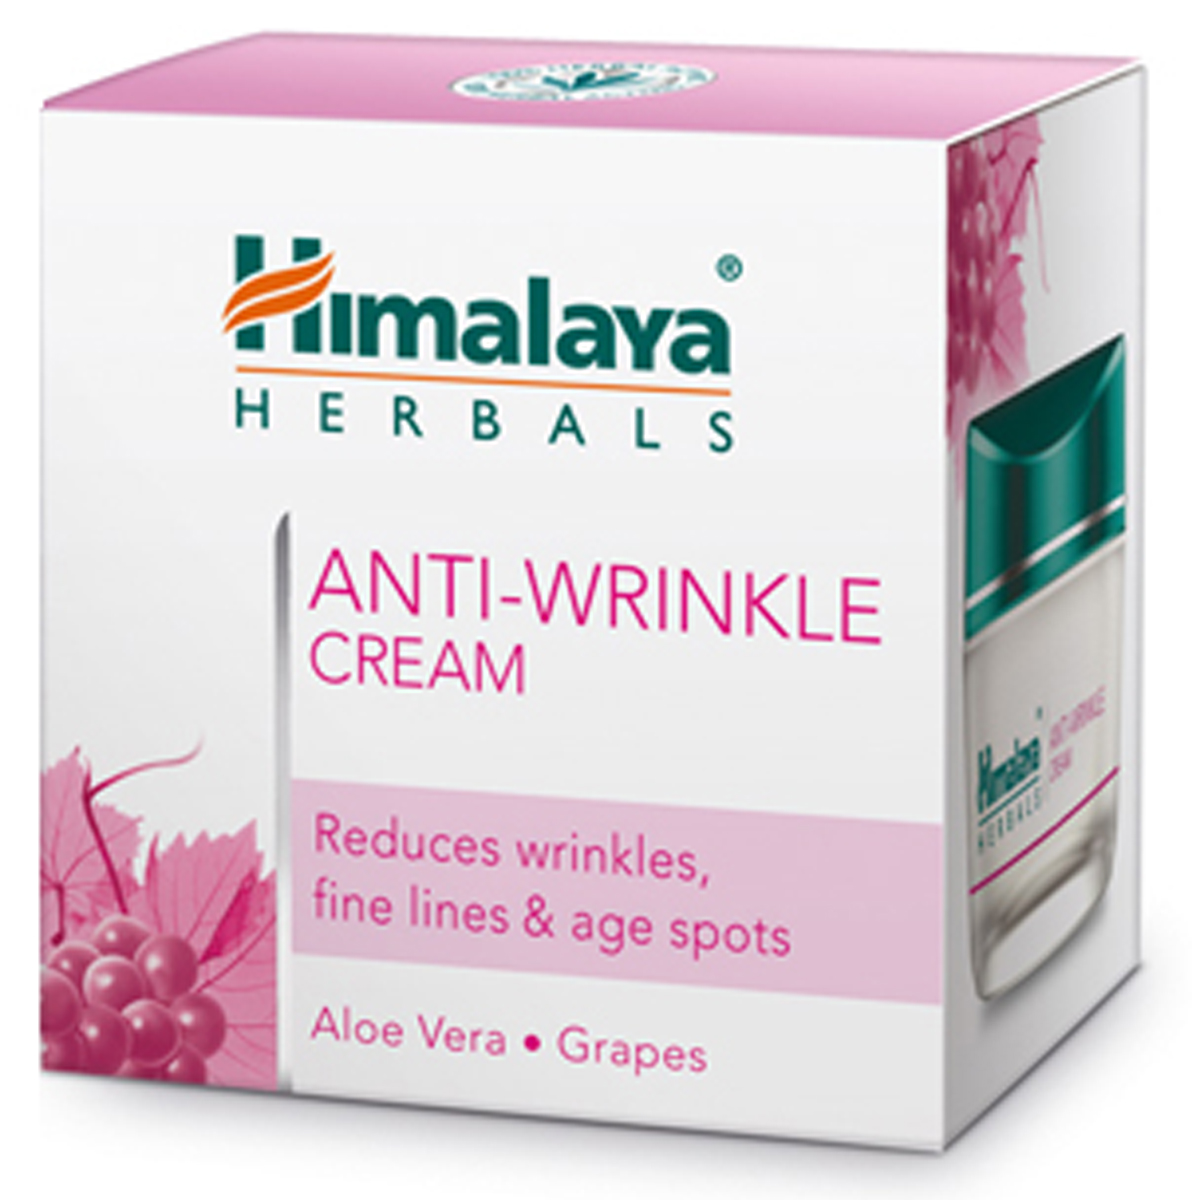 Himalaya купить. Крем Himalaya Anti-Wrinkle Cream. Anti-Wrinkle Cream Himalaya Herbals. Anti Wrinkle Cream Гималая. Индийская косметика Himalaya.